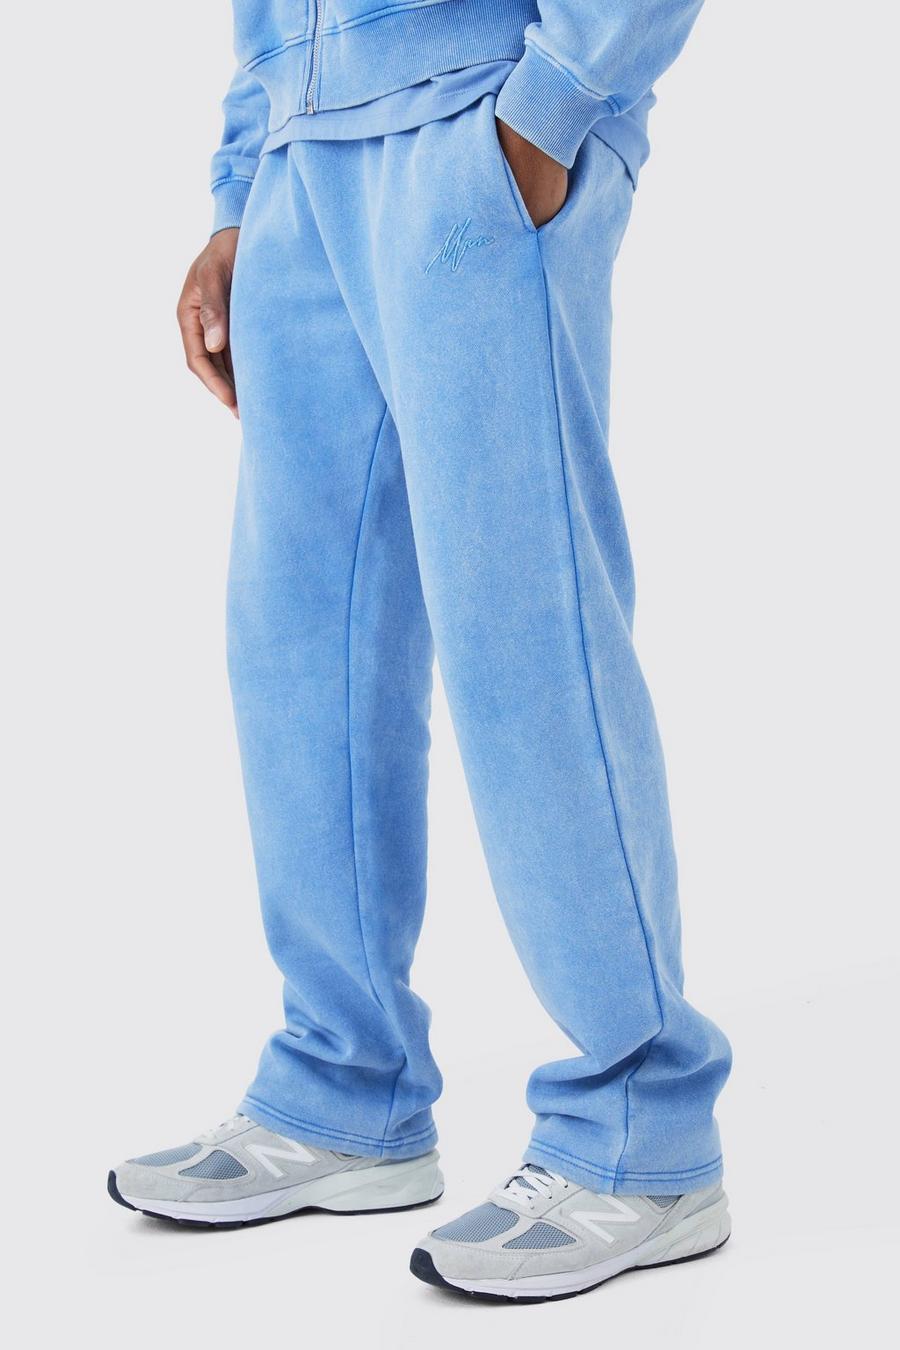 Pantalón deportivo MAN holgado con lavado a la piedra, Cornflower blue